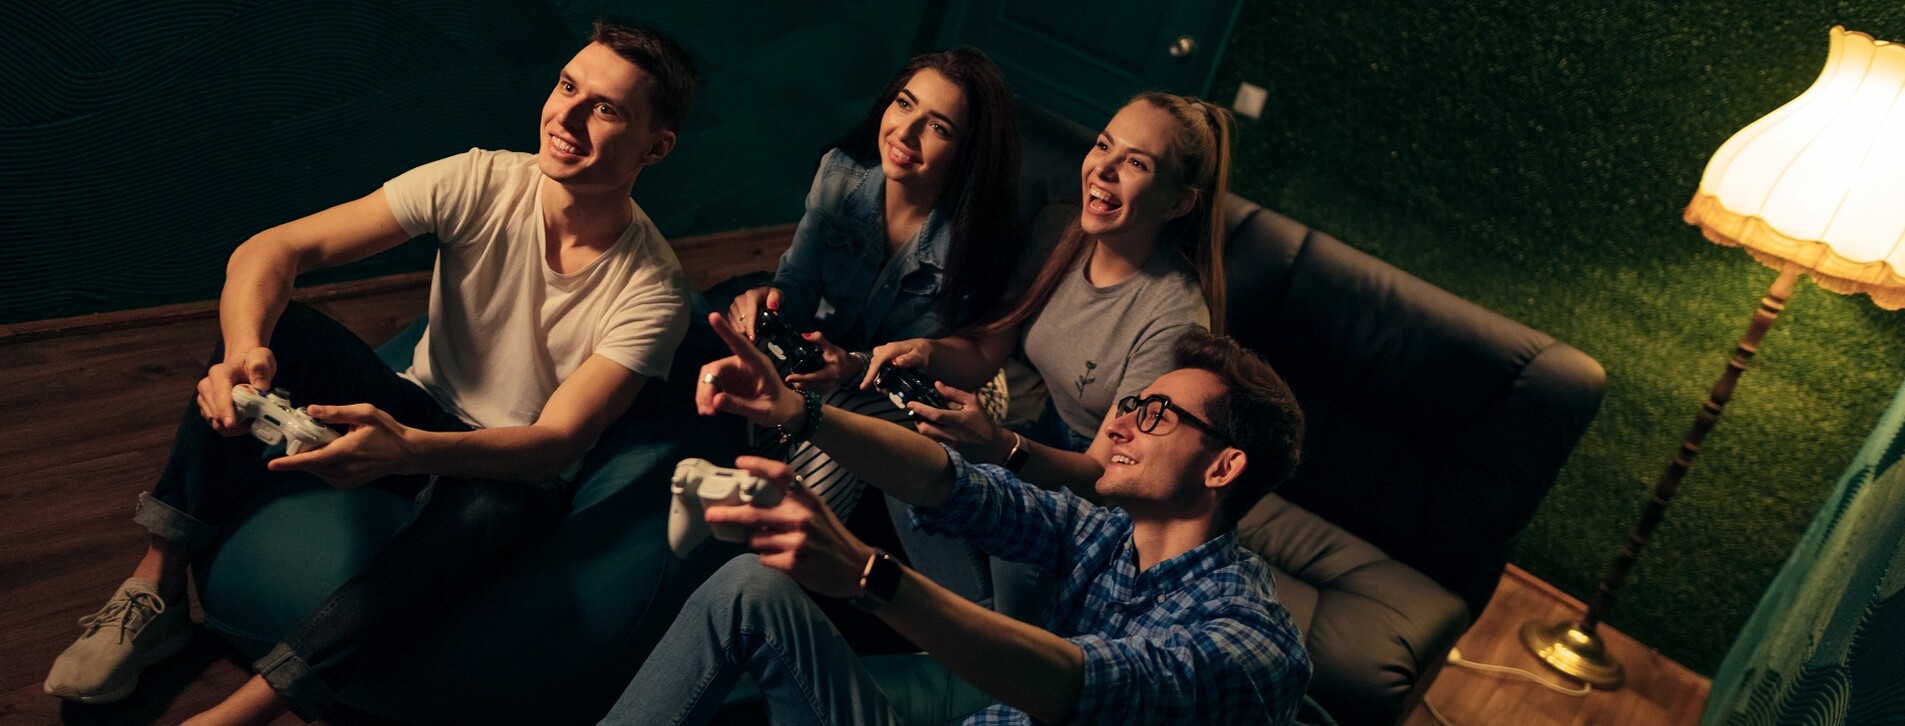 Фото 1 - Xbox с друзьями